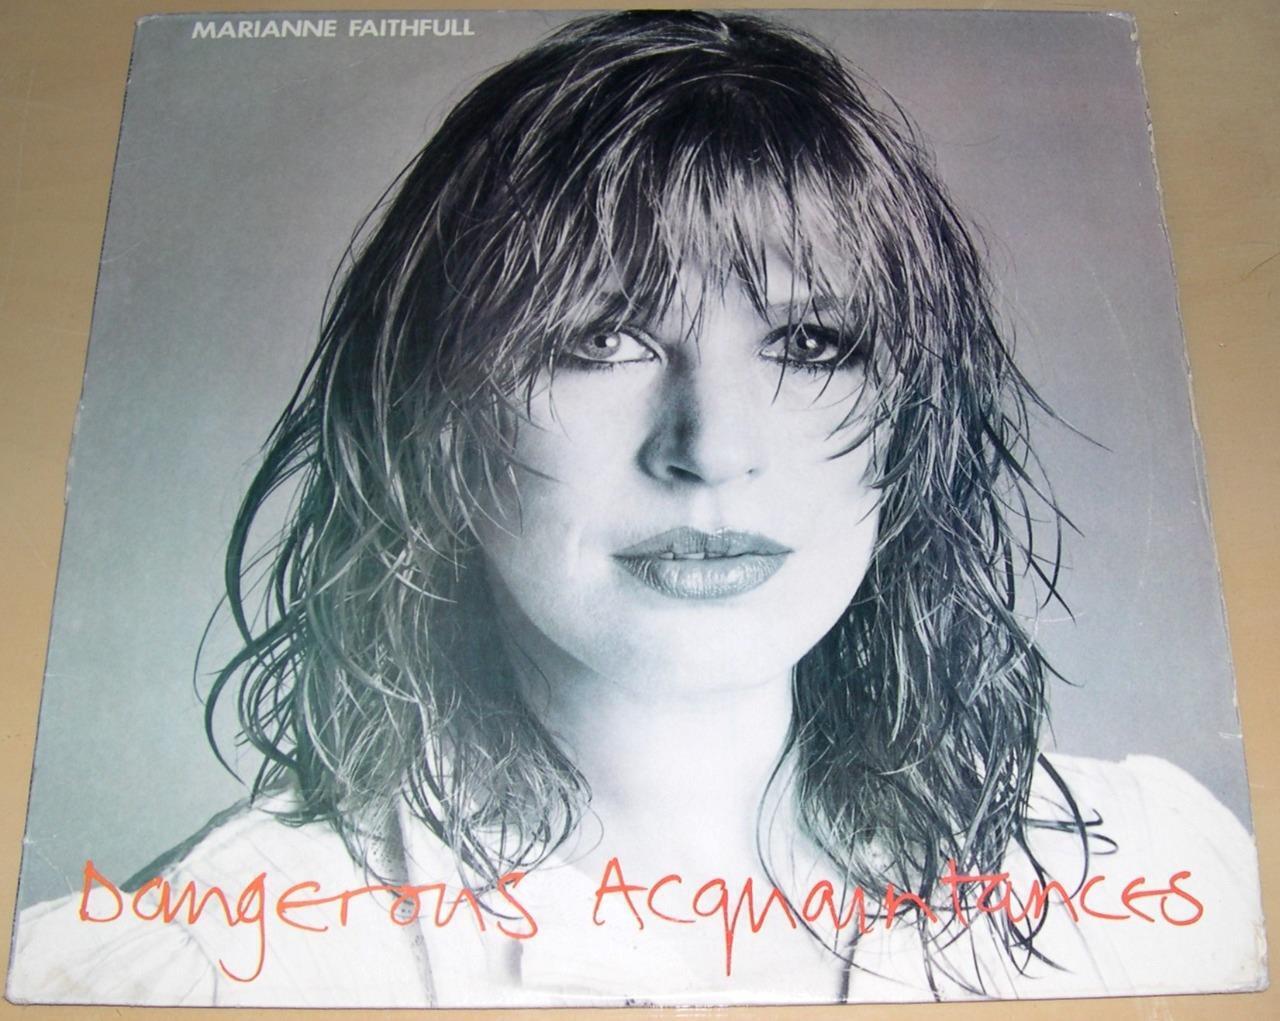 MARIANNE FAITHFULL - Dangerous Acquaintances  (LP, 1981)  Very Good+